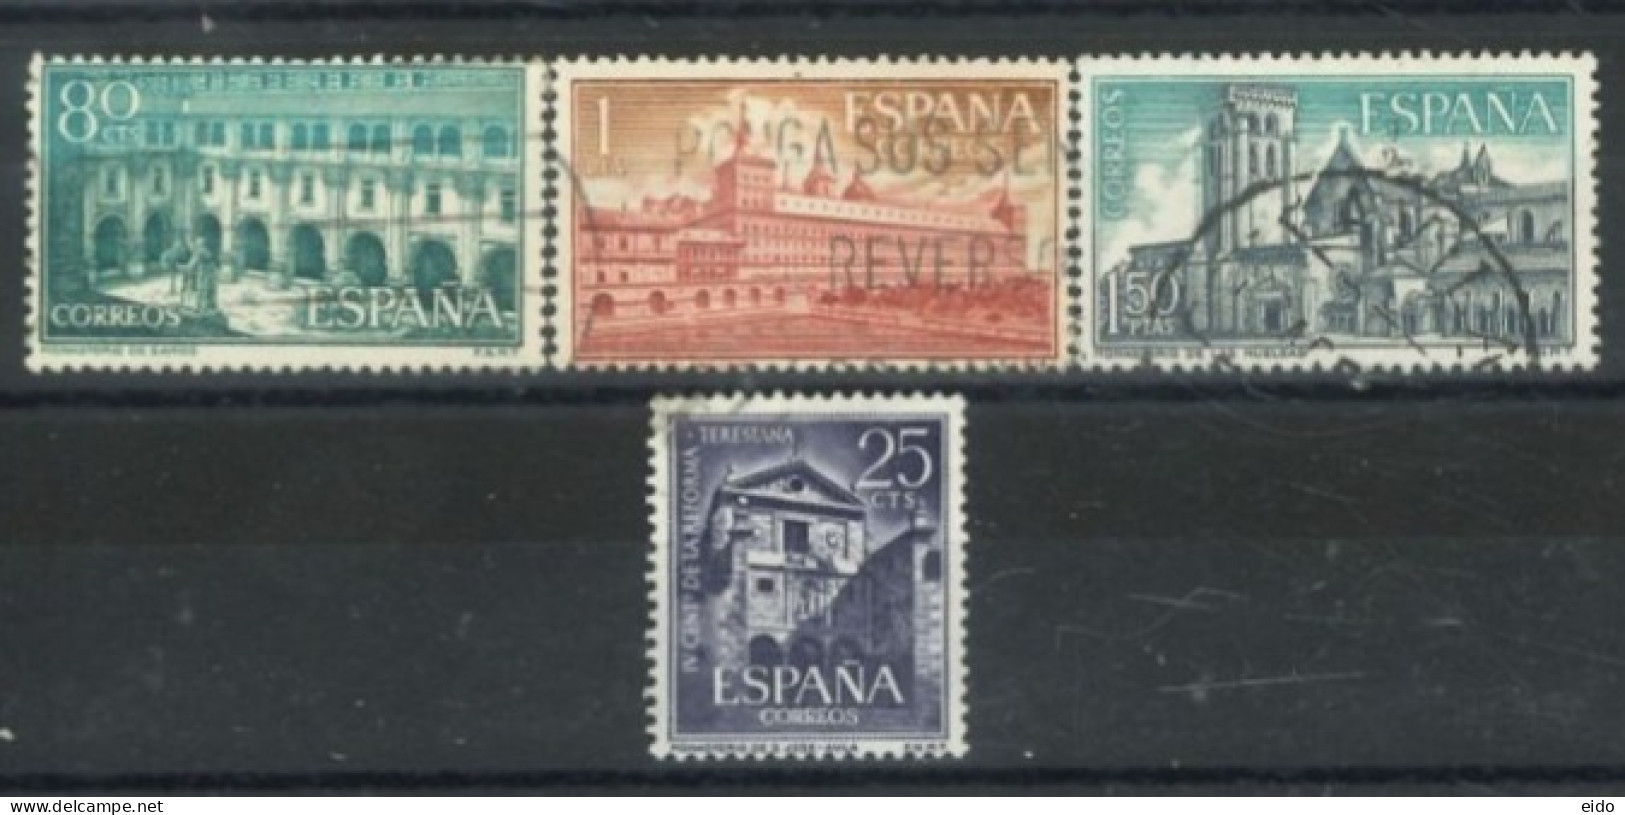 SPAIN, 1960/61, MONASTERIES & SAN JOSE CONVENT STAMPS SET OF 4, USED. - Oblitérés